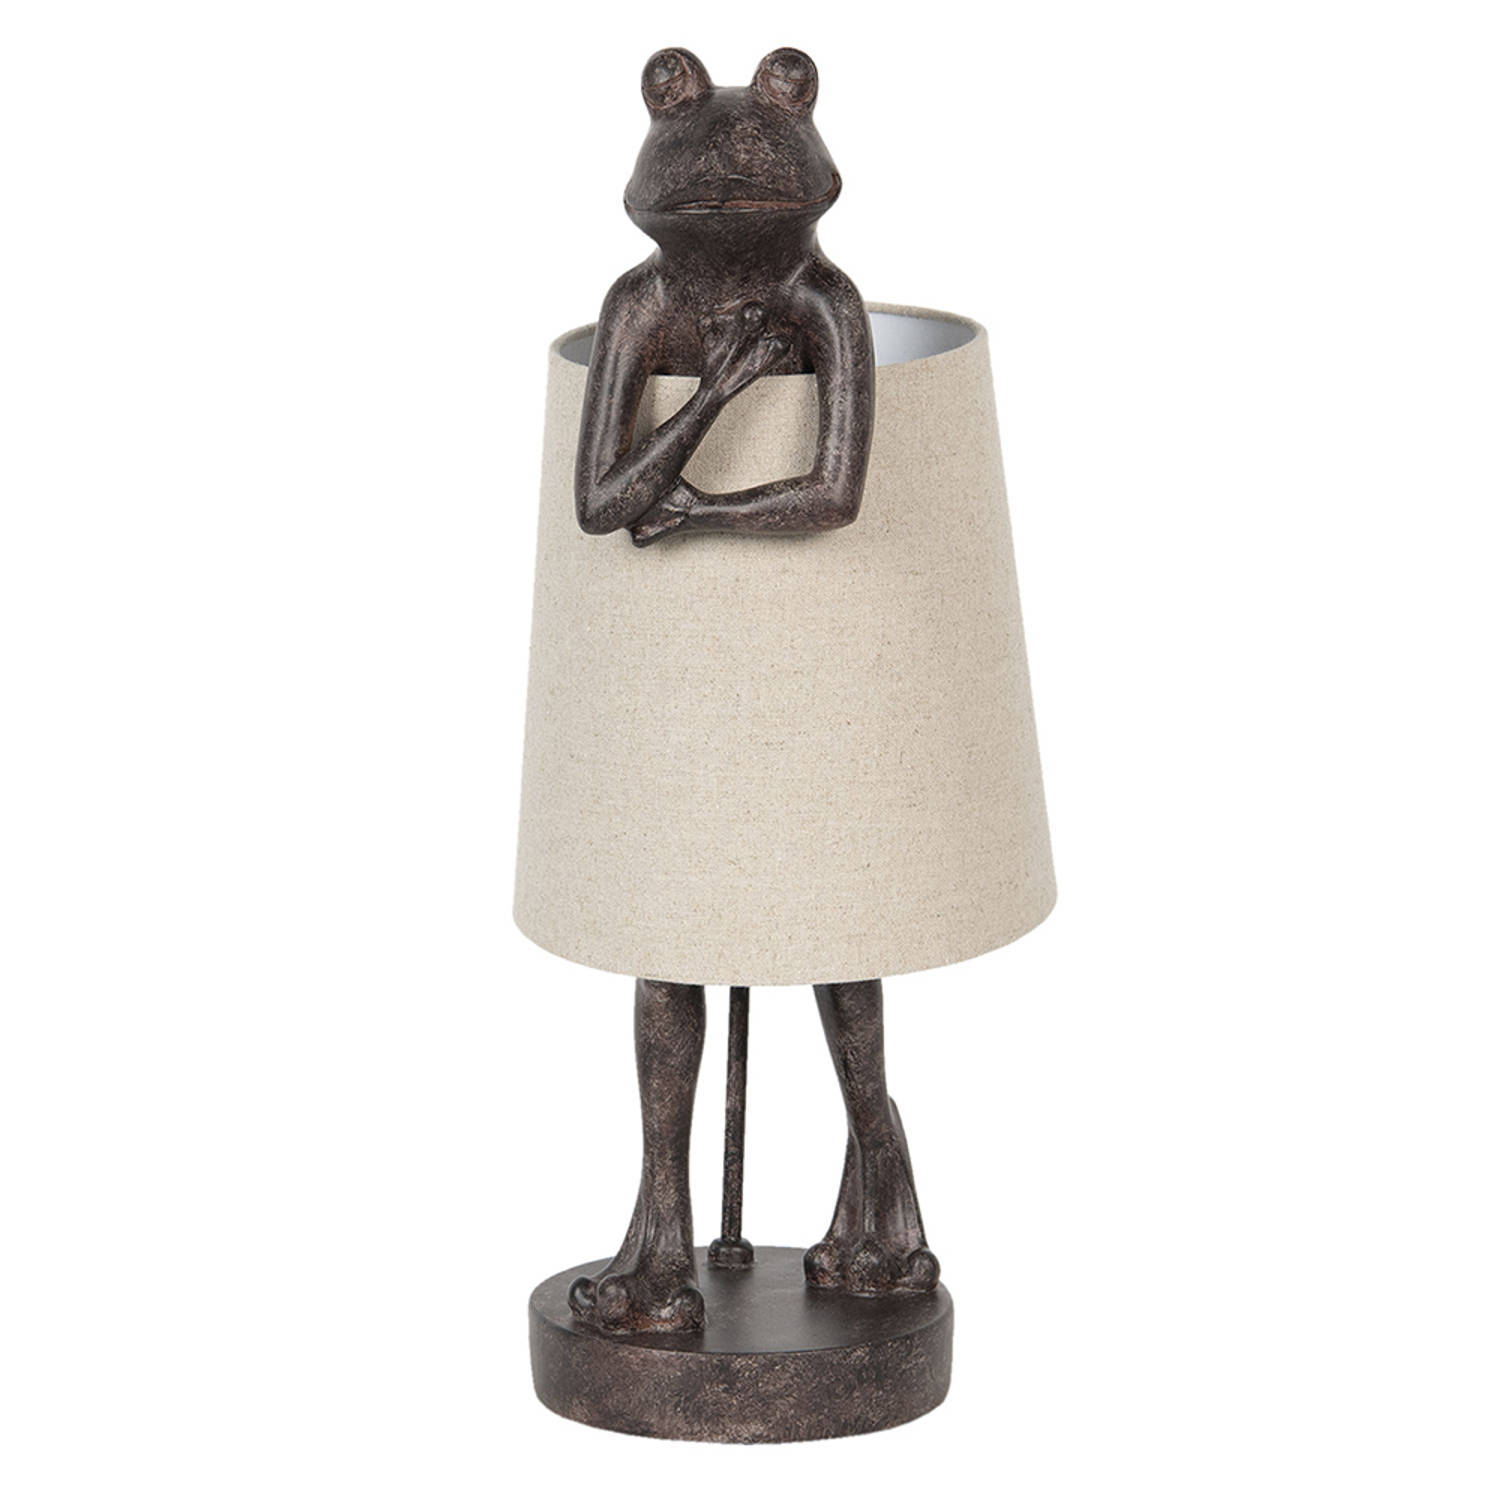 HAES DECO Tafellamp City Jungle Kikker in de Lamp, 23*23*56 cm Bureaulamp, Sfeerlamp, Nachtlampje